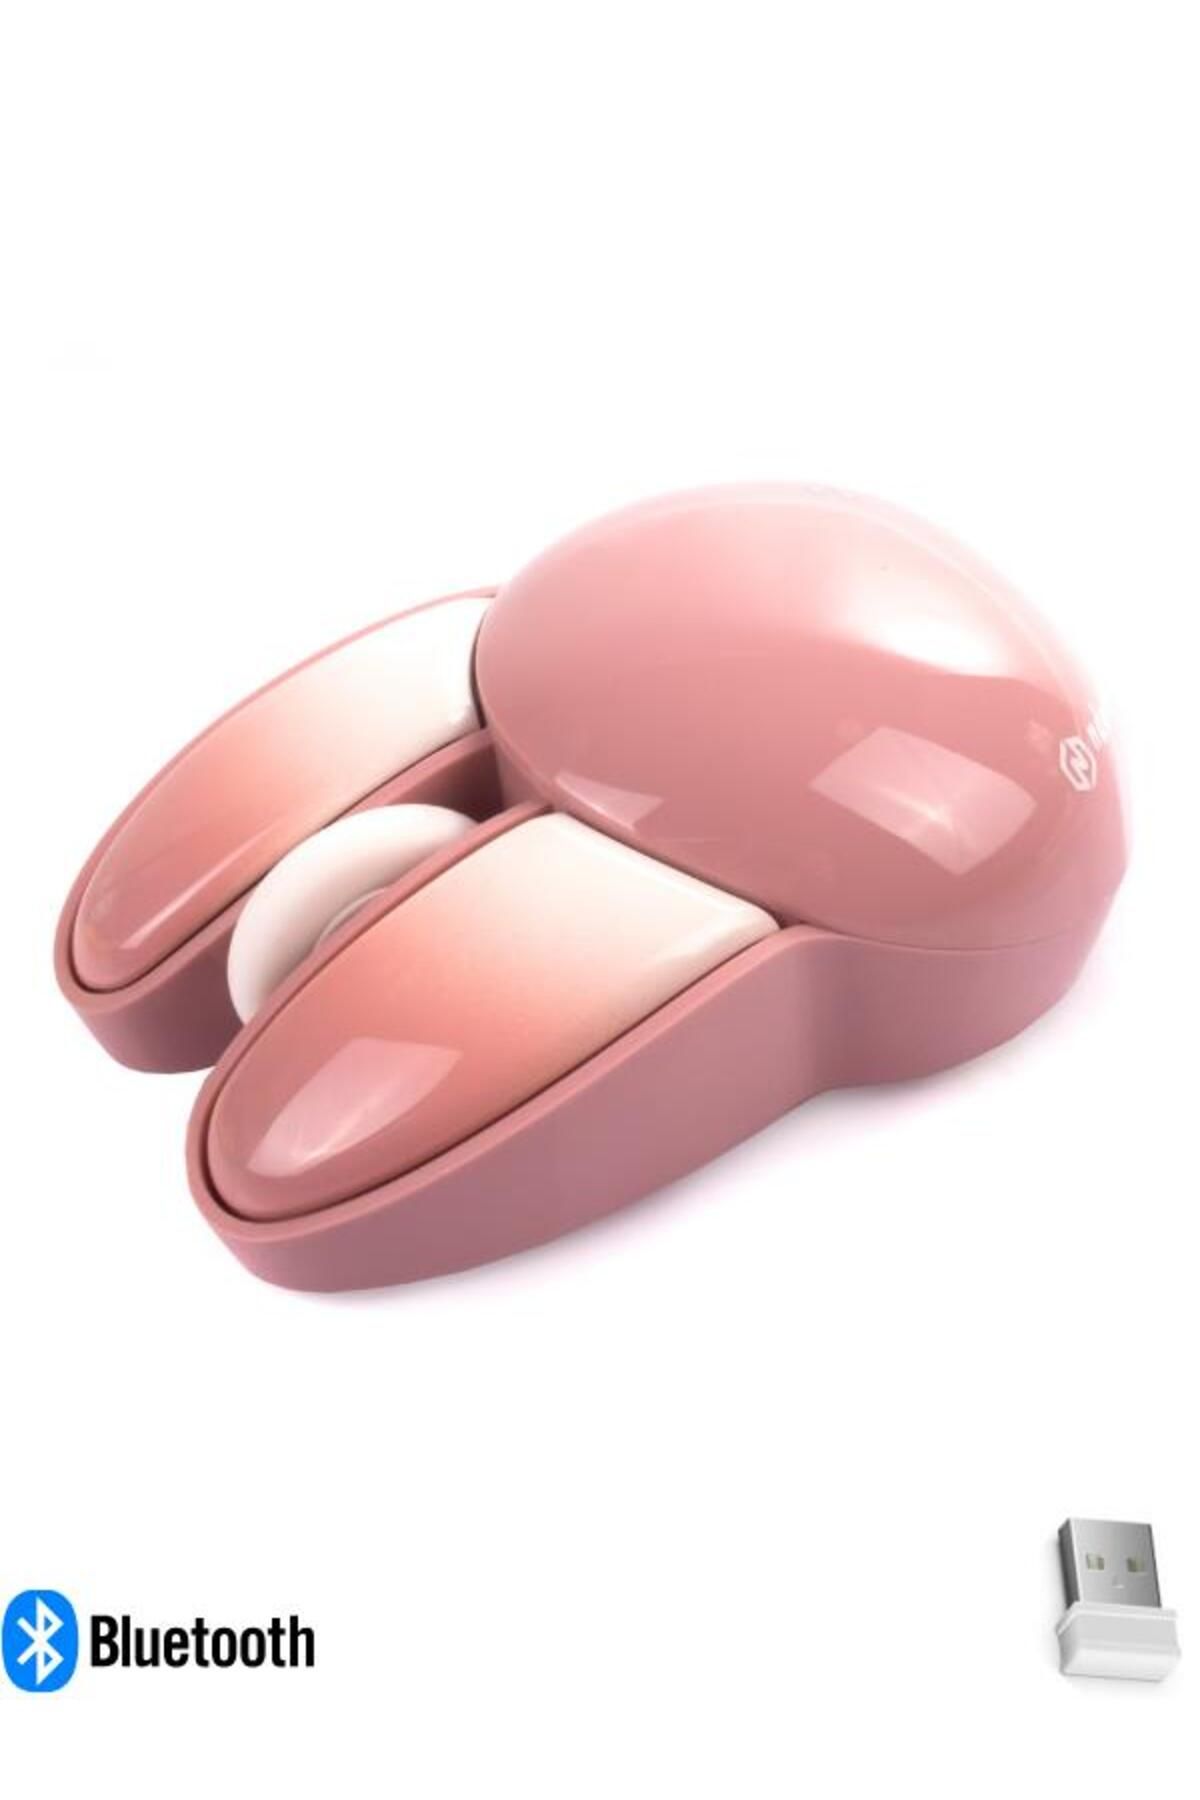 NDNeed Sevimli Tavşan 3D Pembe Mouse Bluetooth + 2.4G Dual Mode